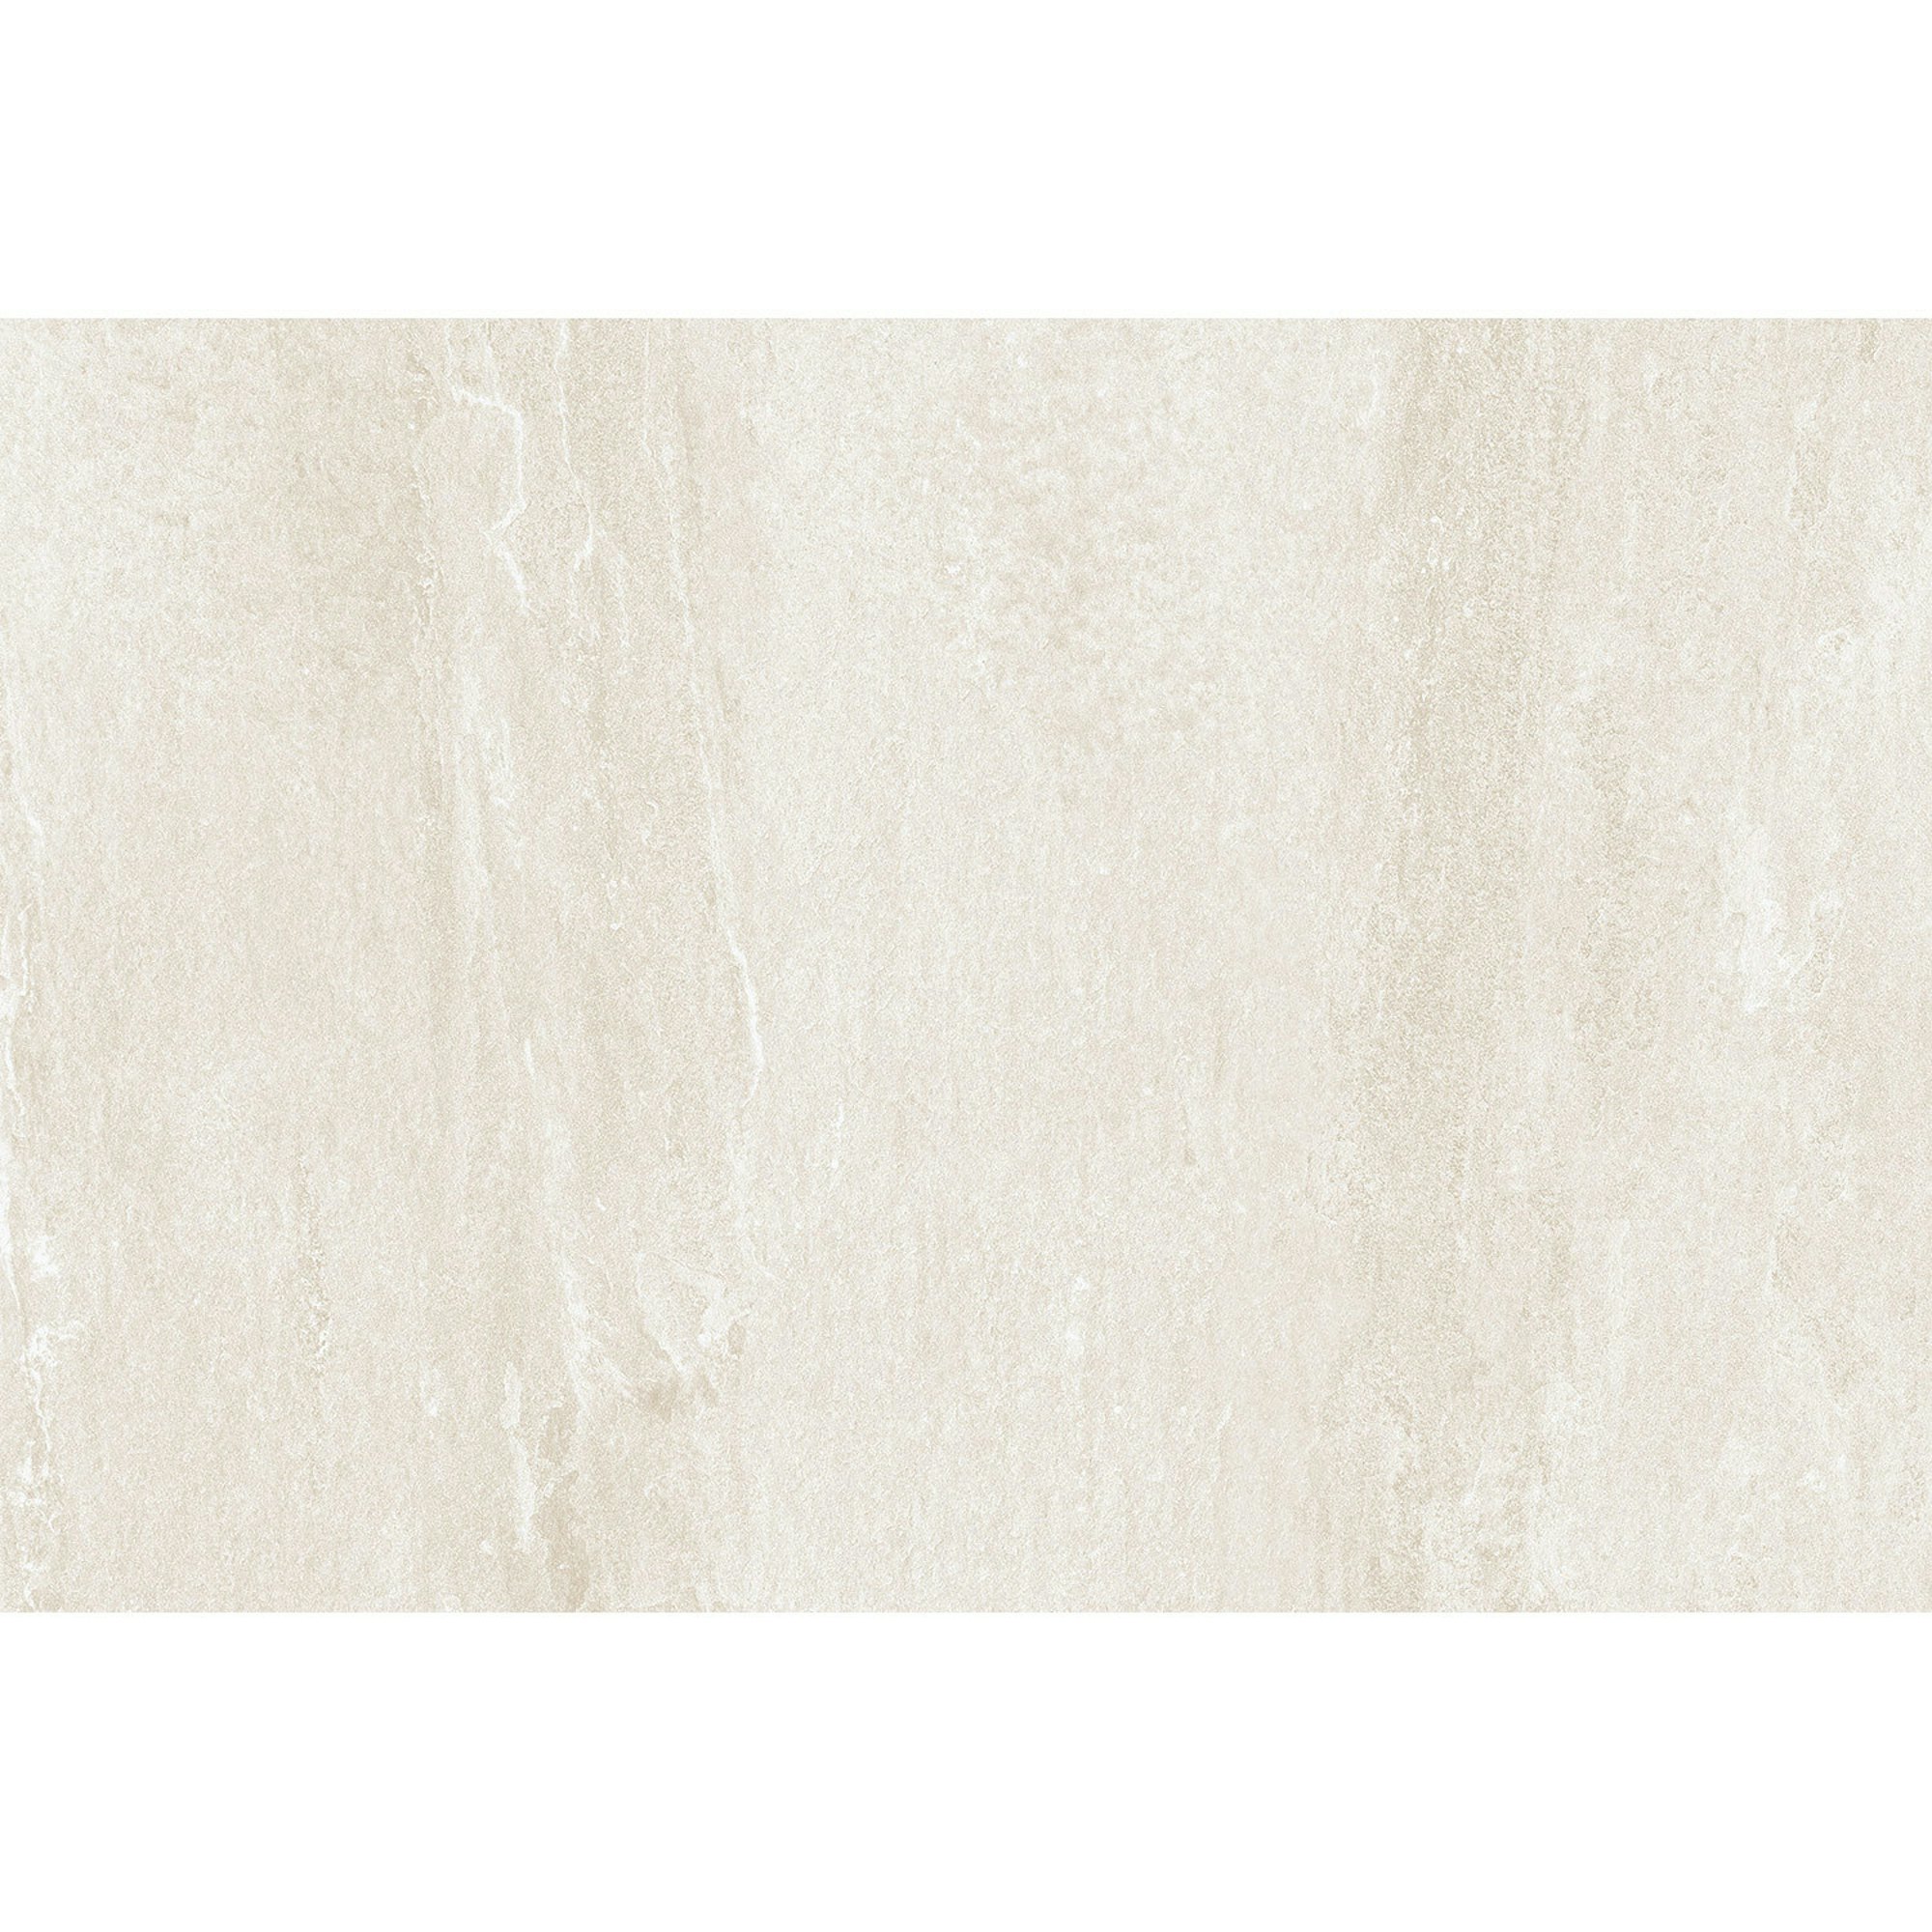 Evergreen White Stone Outdoor 20mm Tile